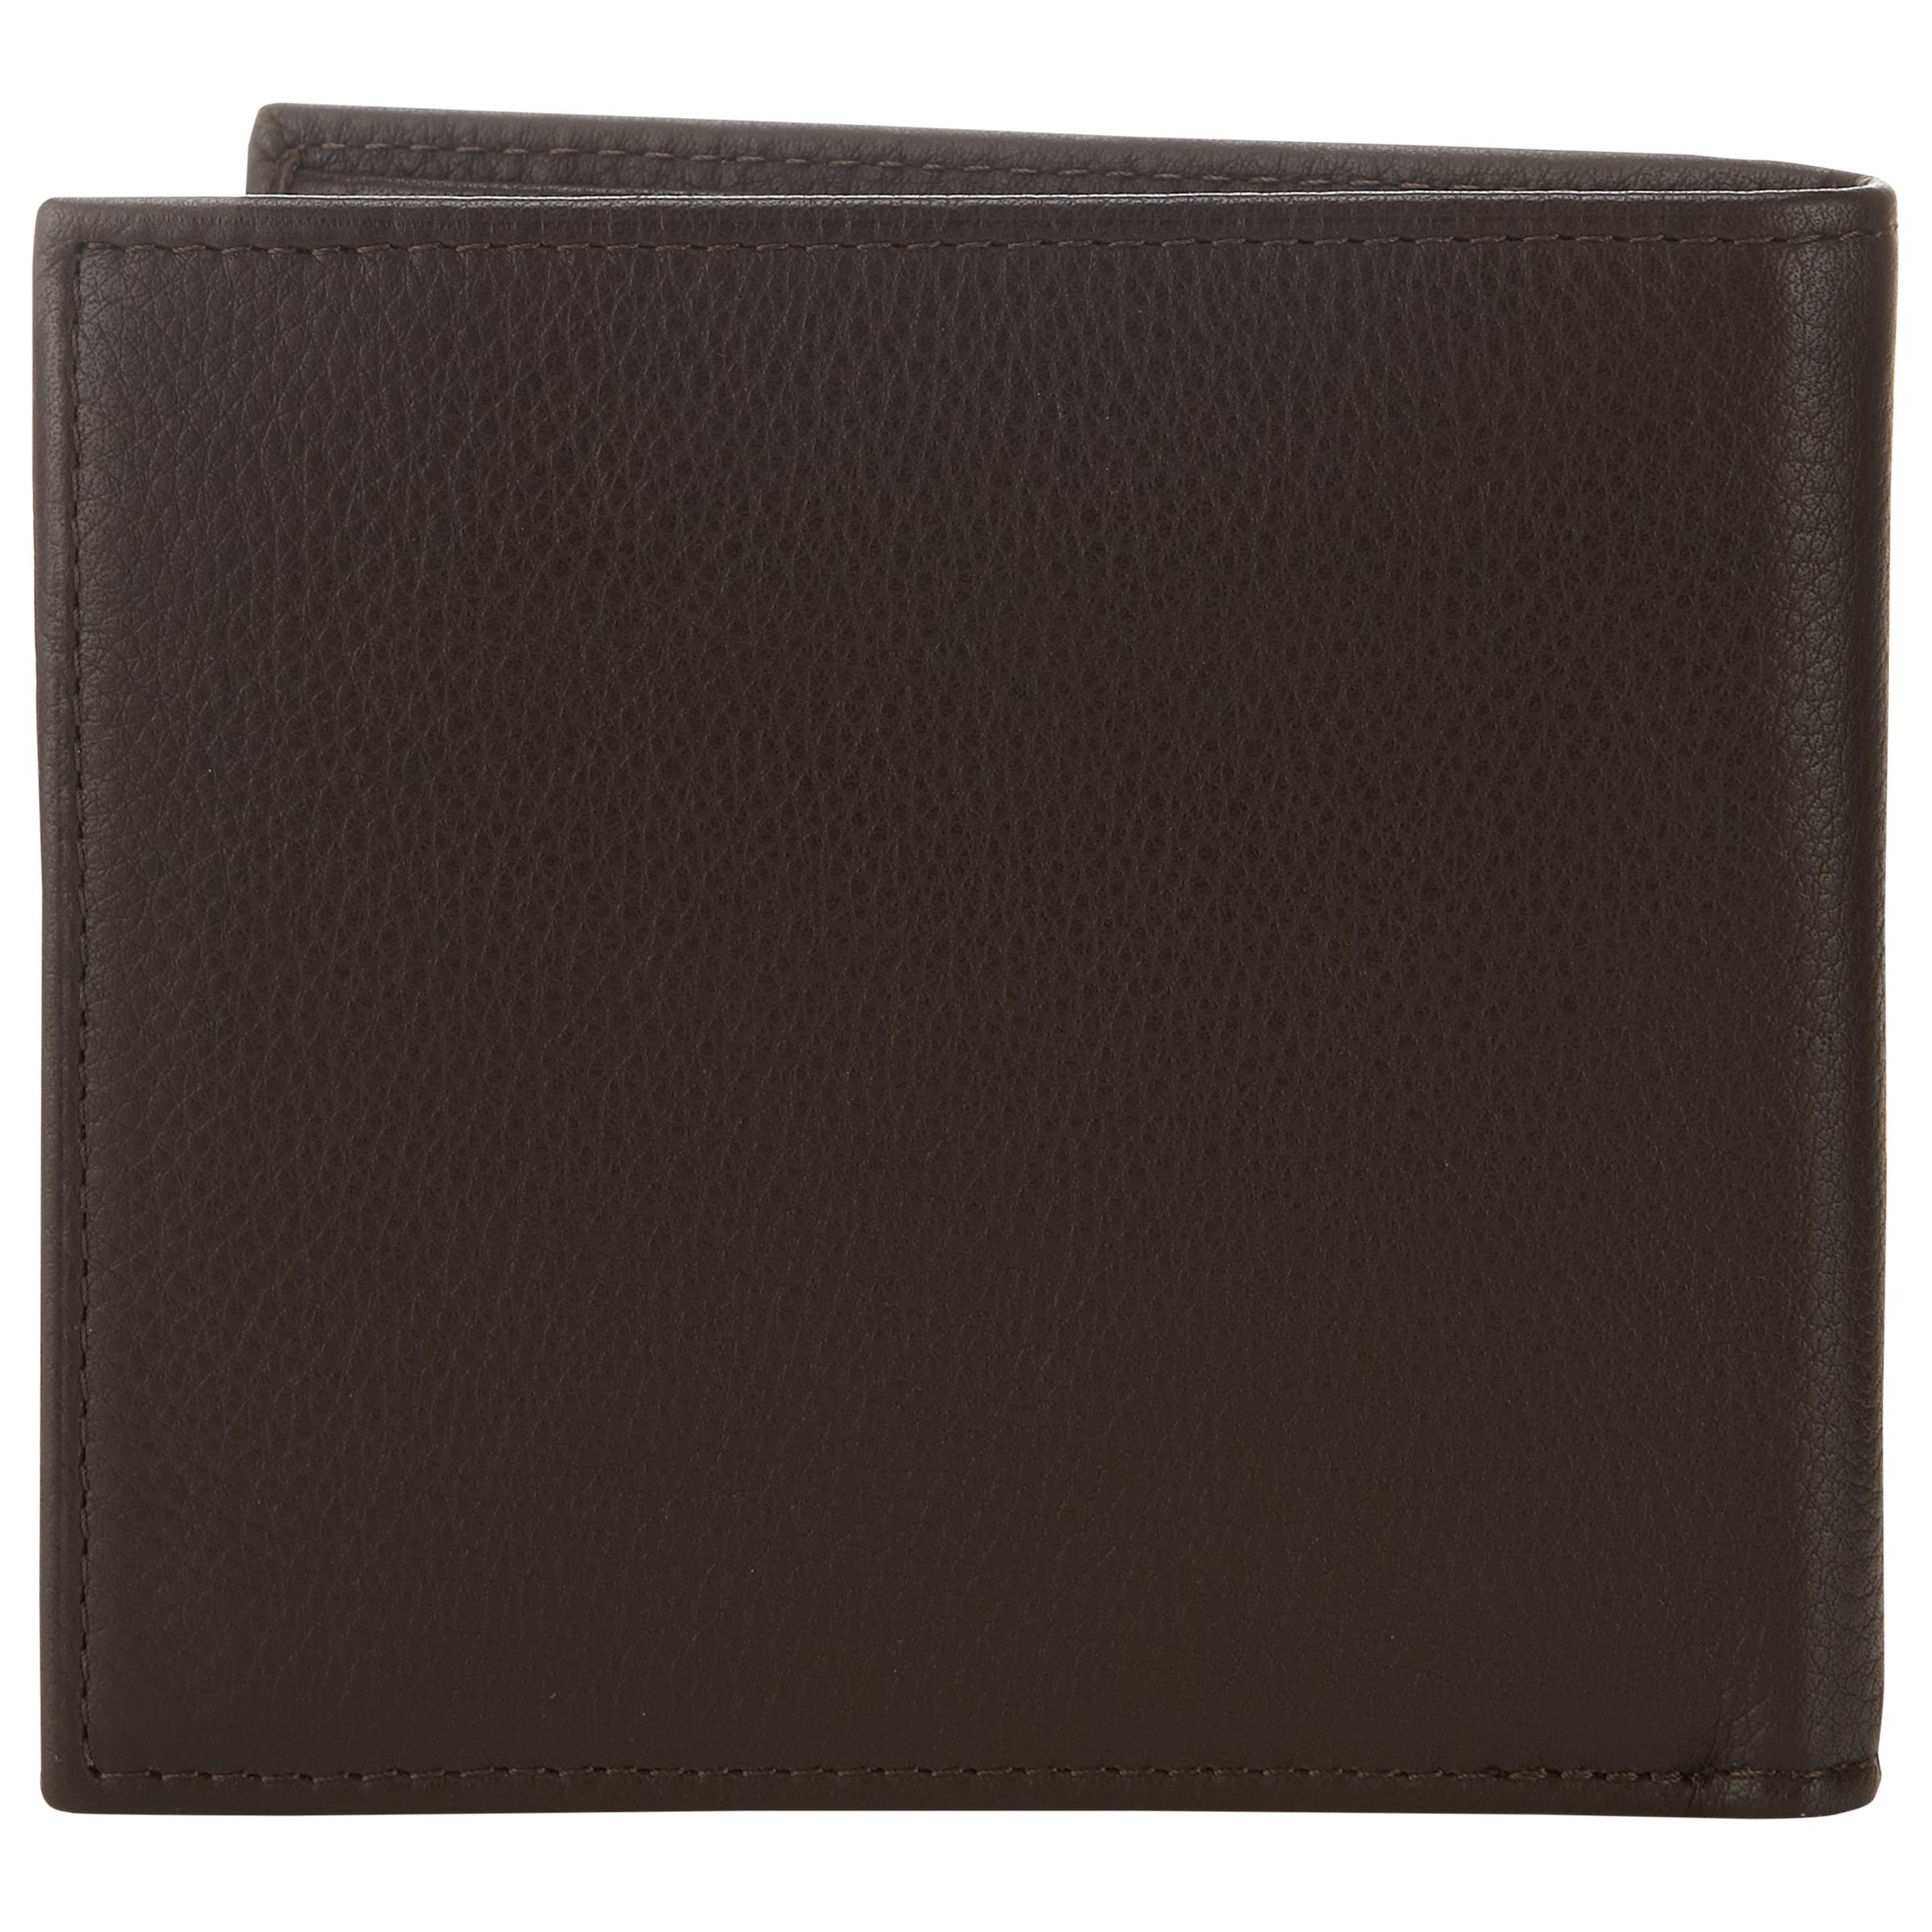 Polo Ralph Lauren Pebble Grain Leather Wallet, Brown